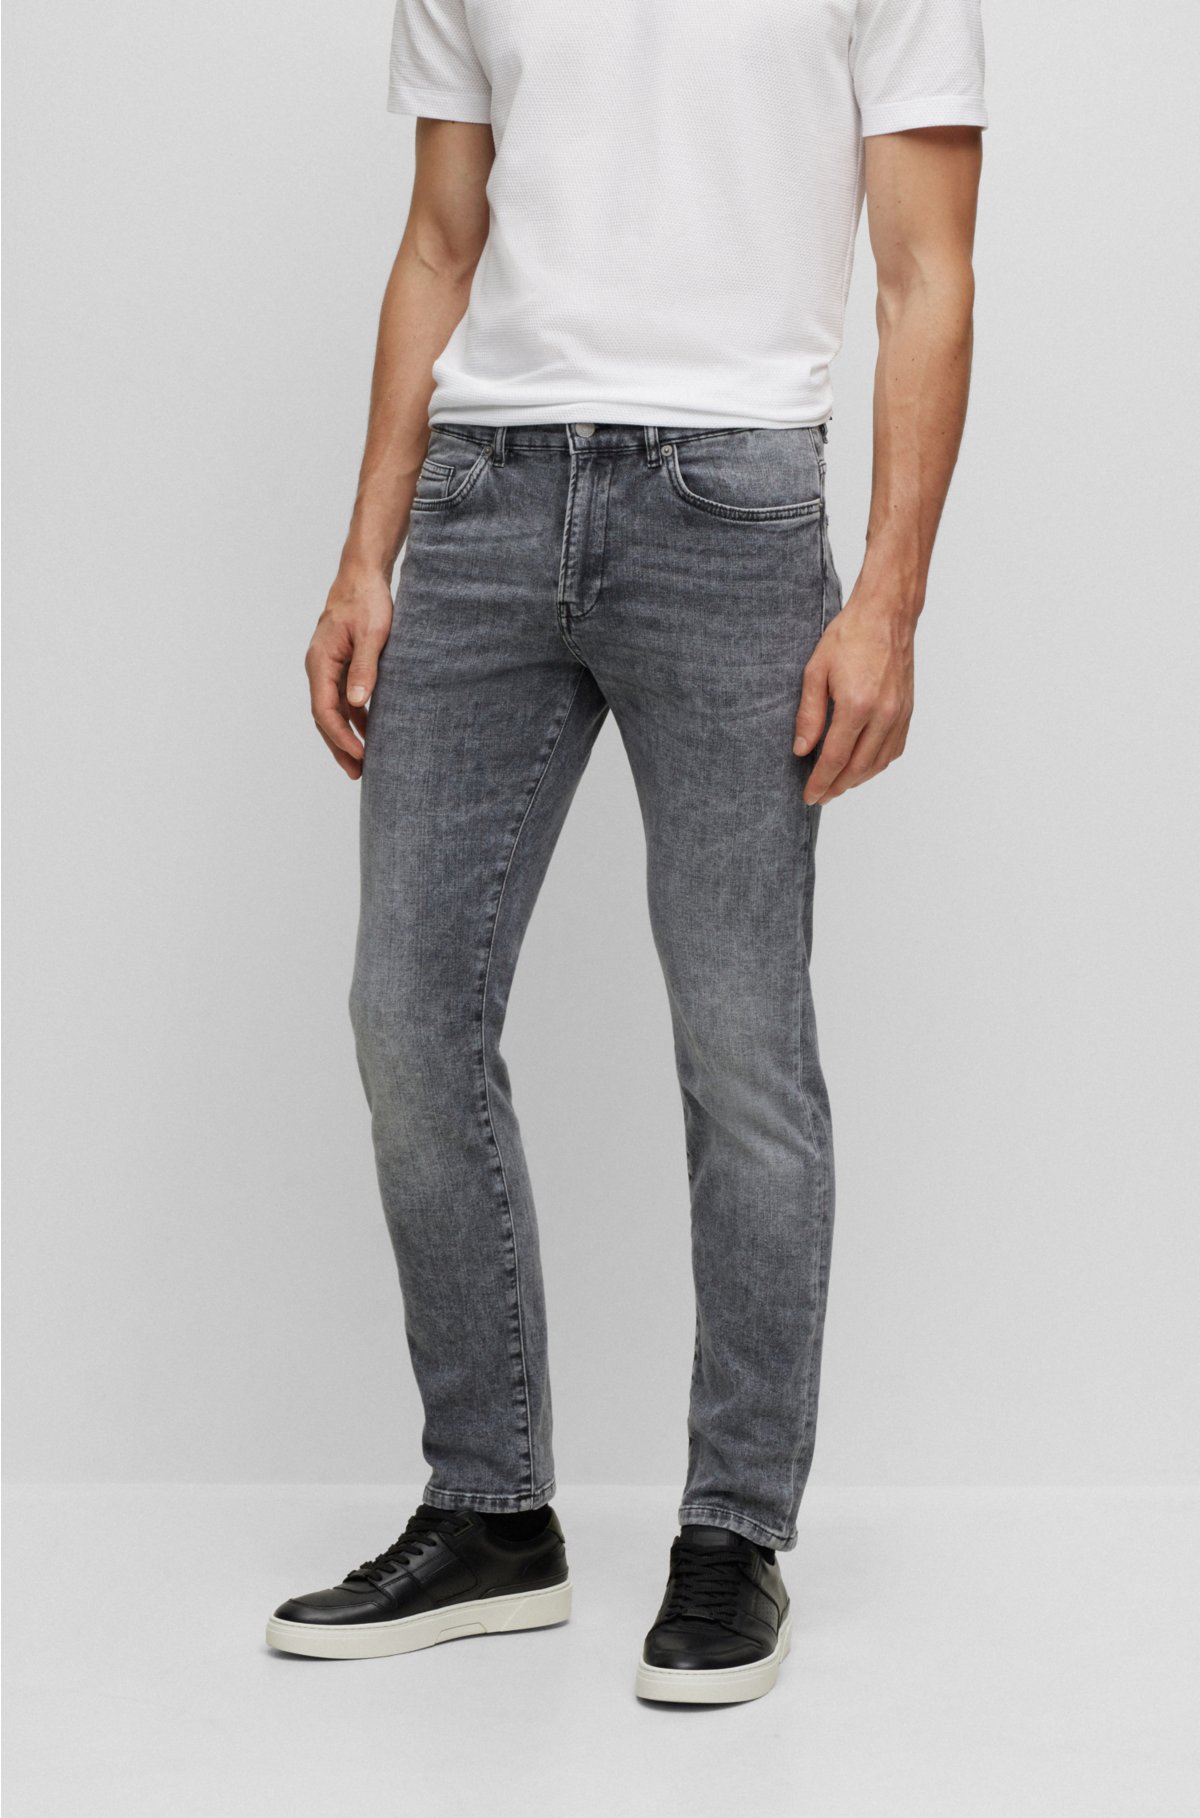 Italian - BOSS in stonewashed stretch jeans gray Slim-fit denim